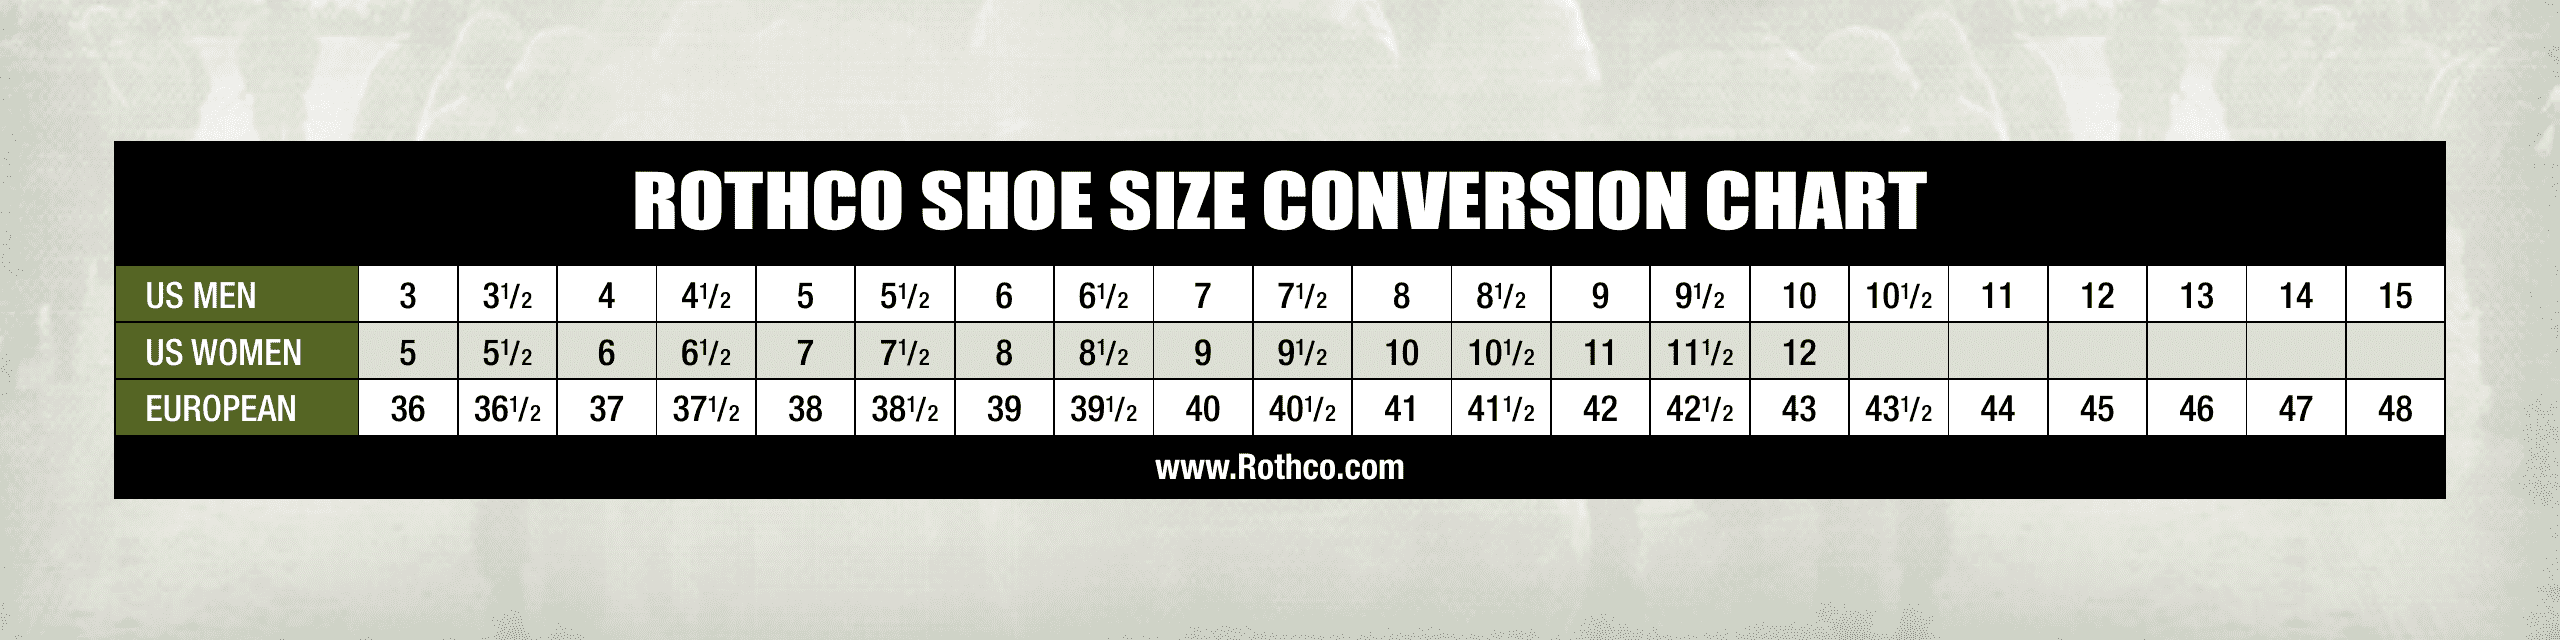 Shoe Size Conversion Chart - Rothco